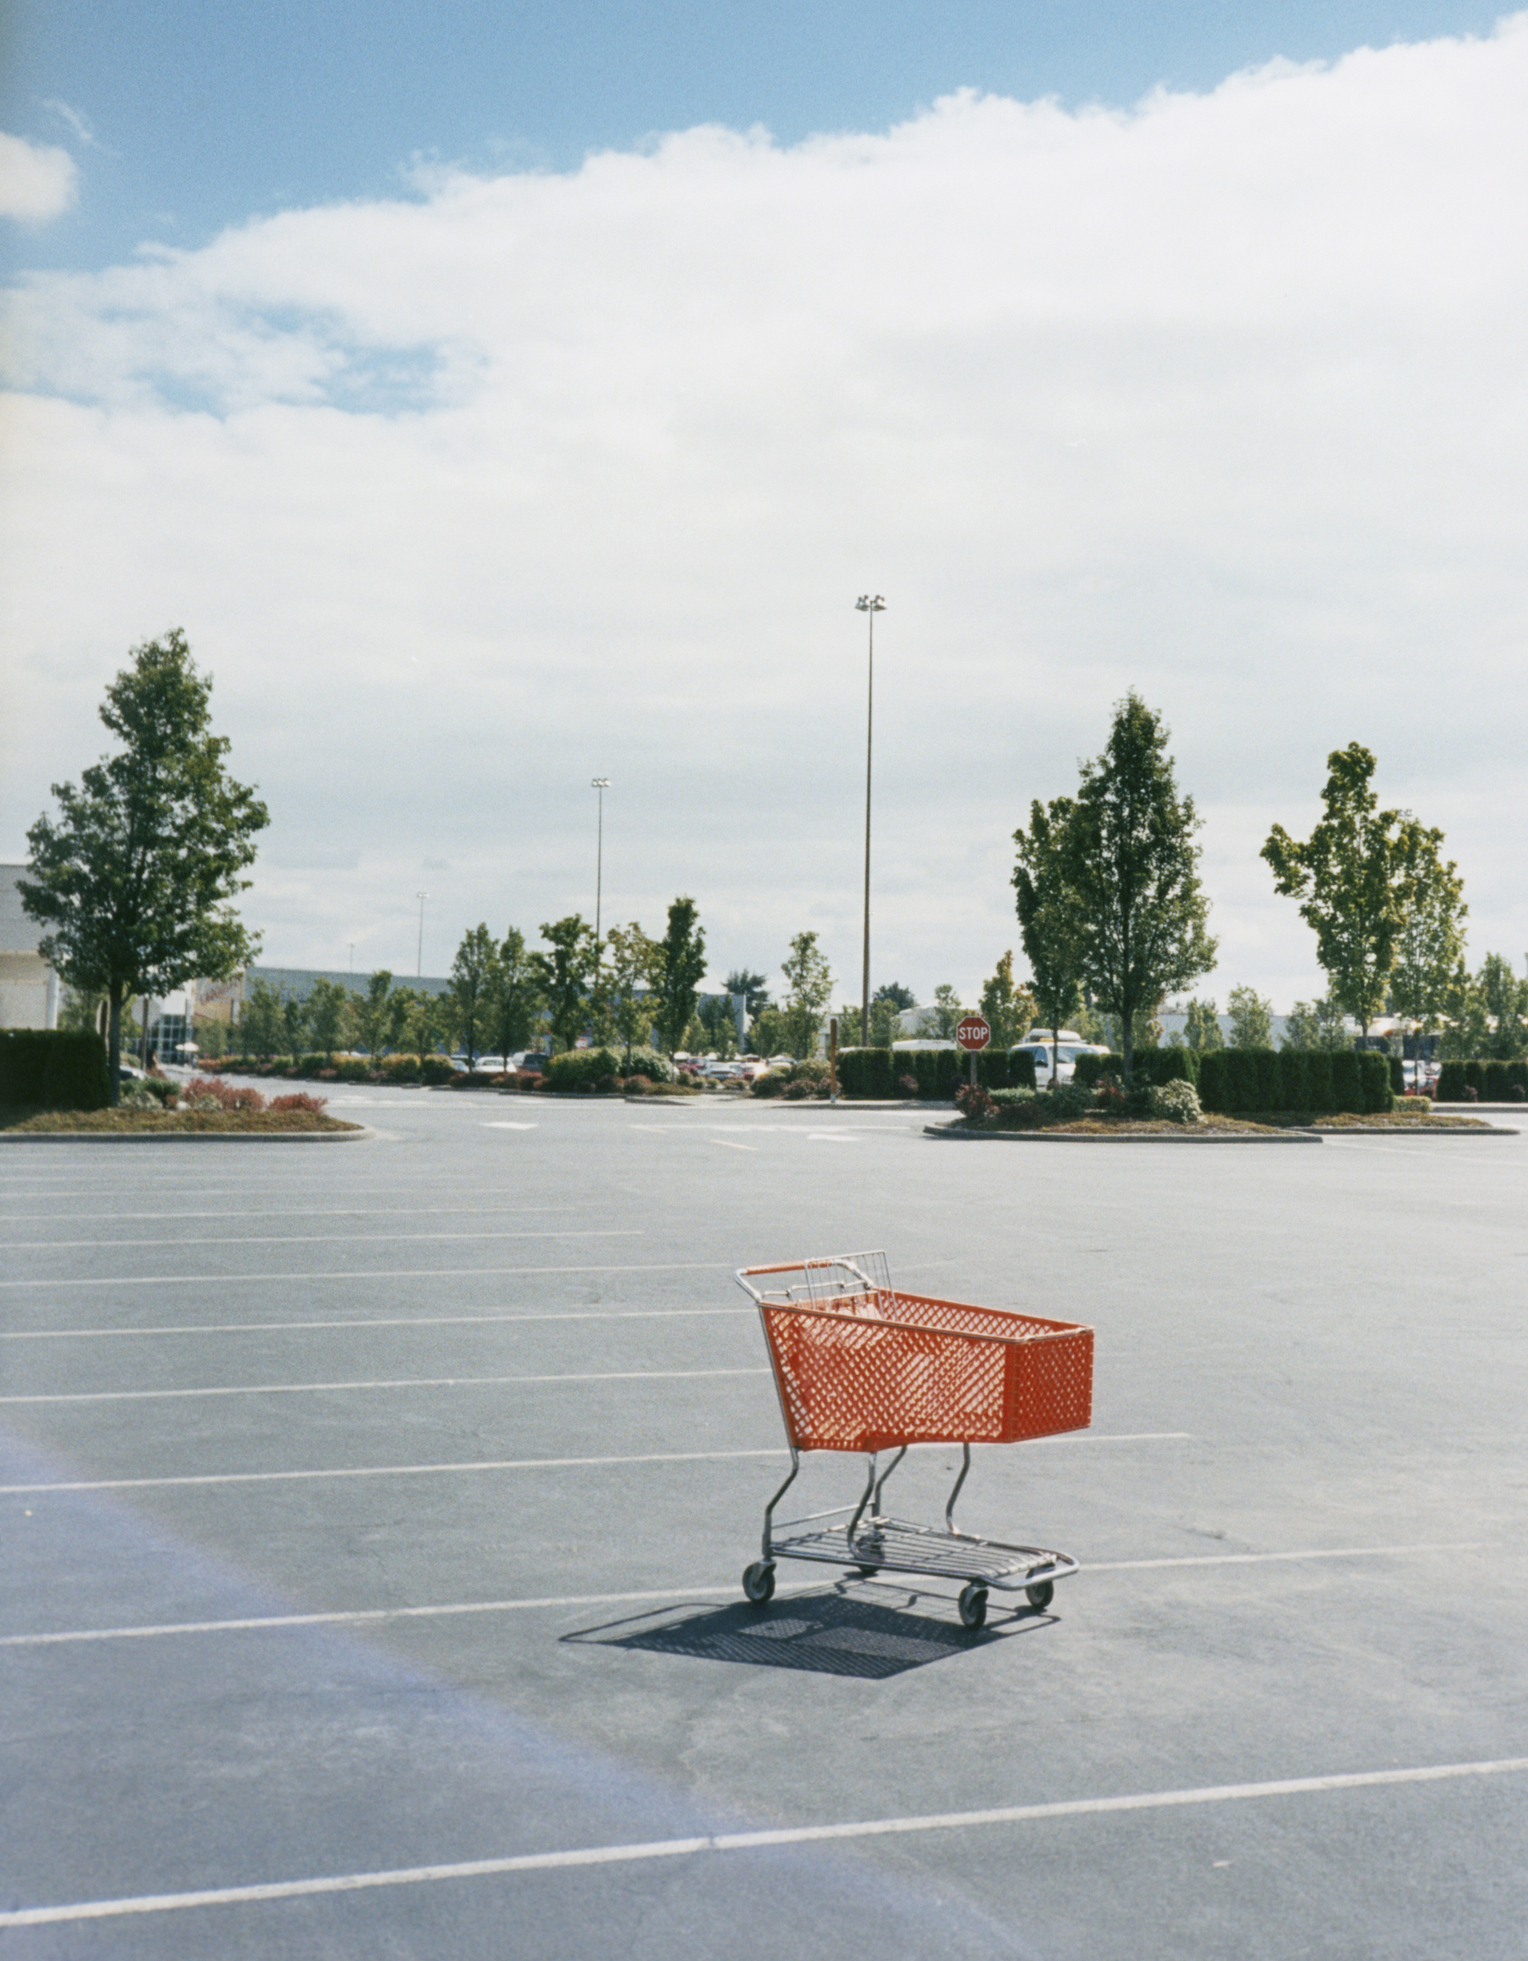 A shopping cart in a parking lot